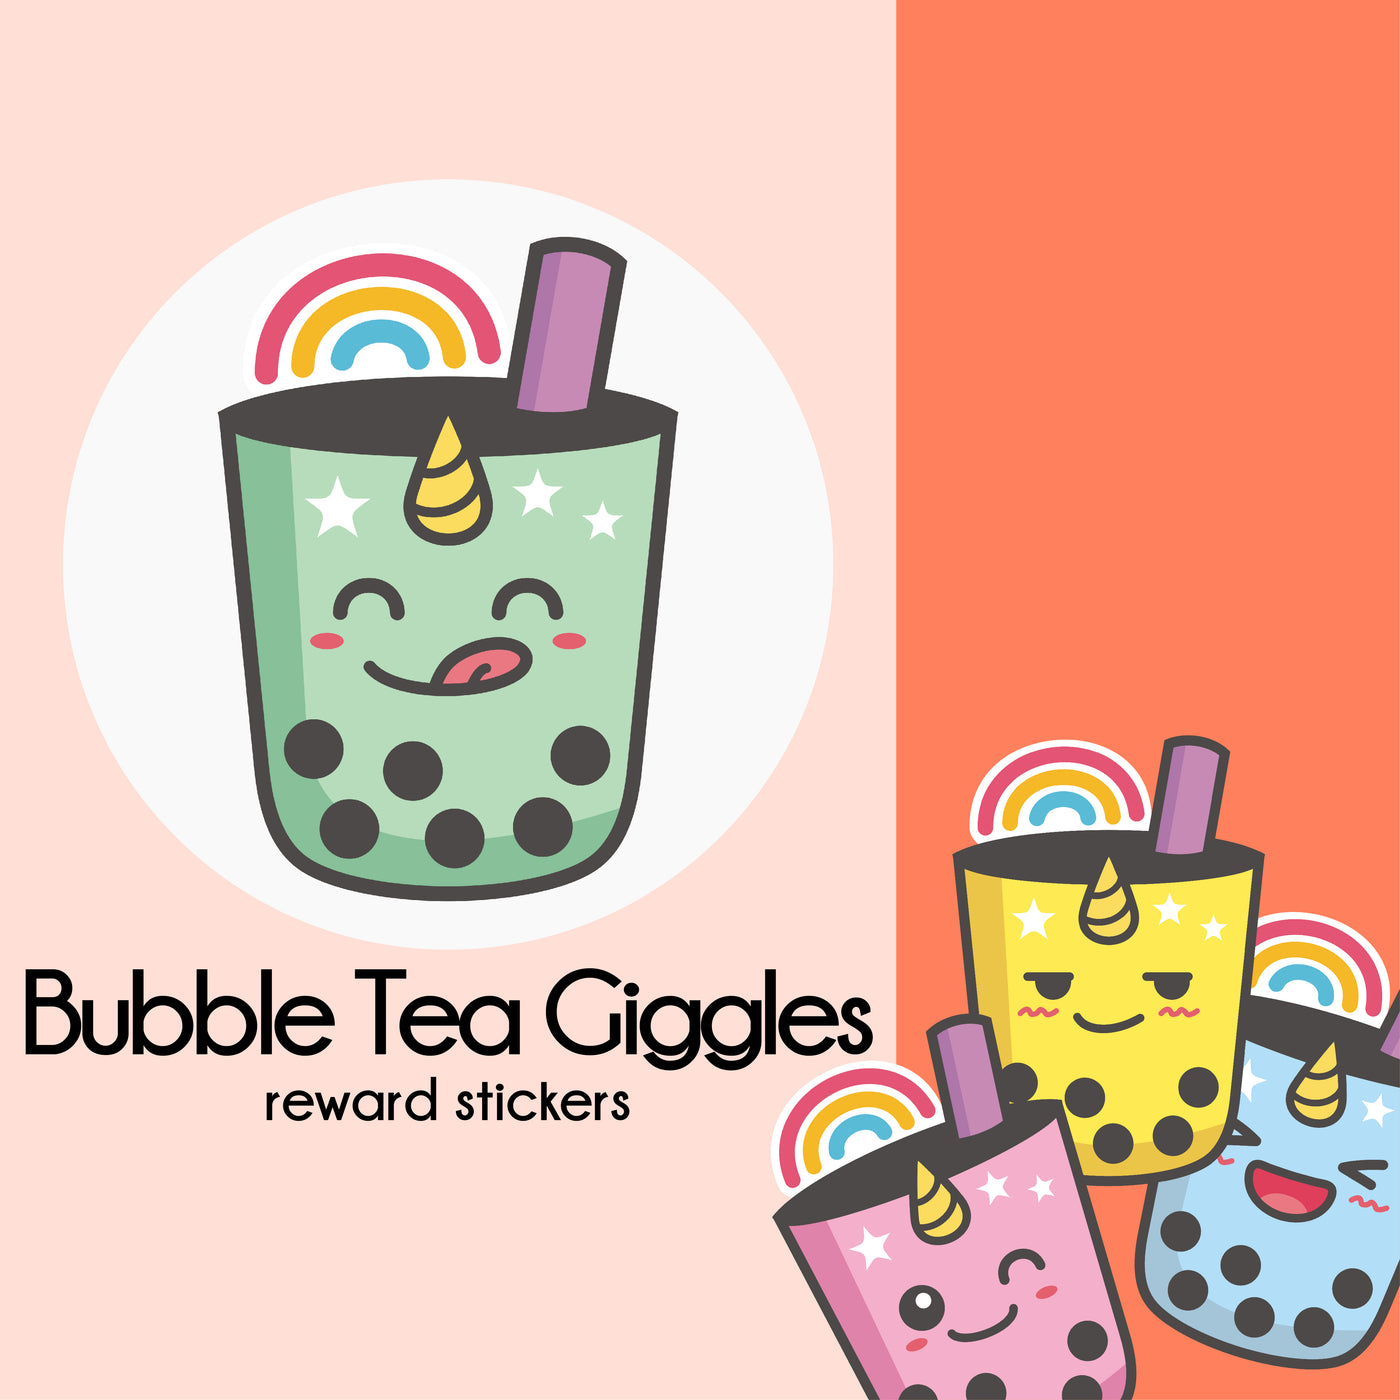 Bubble Tea Giggles